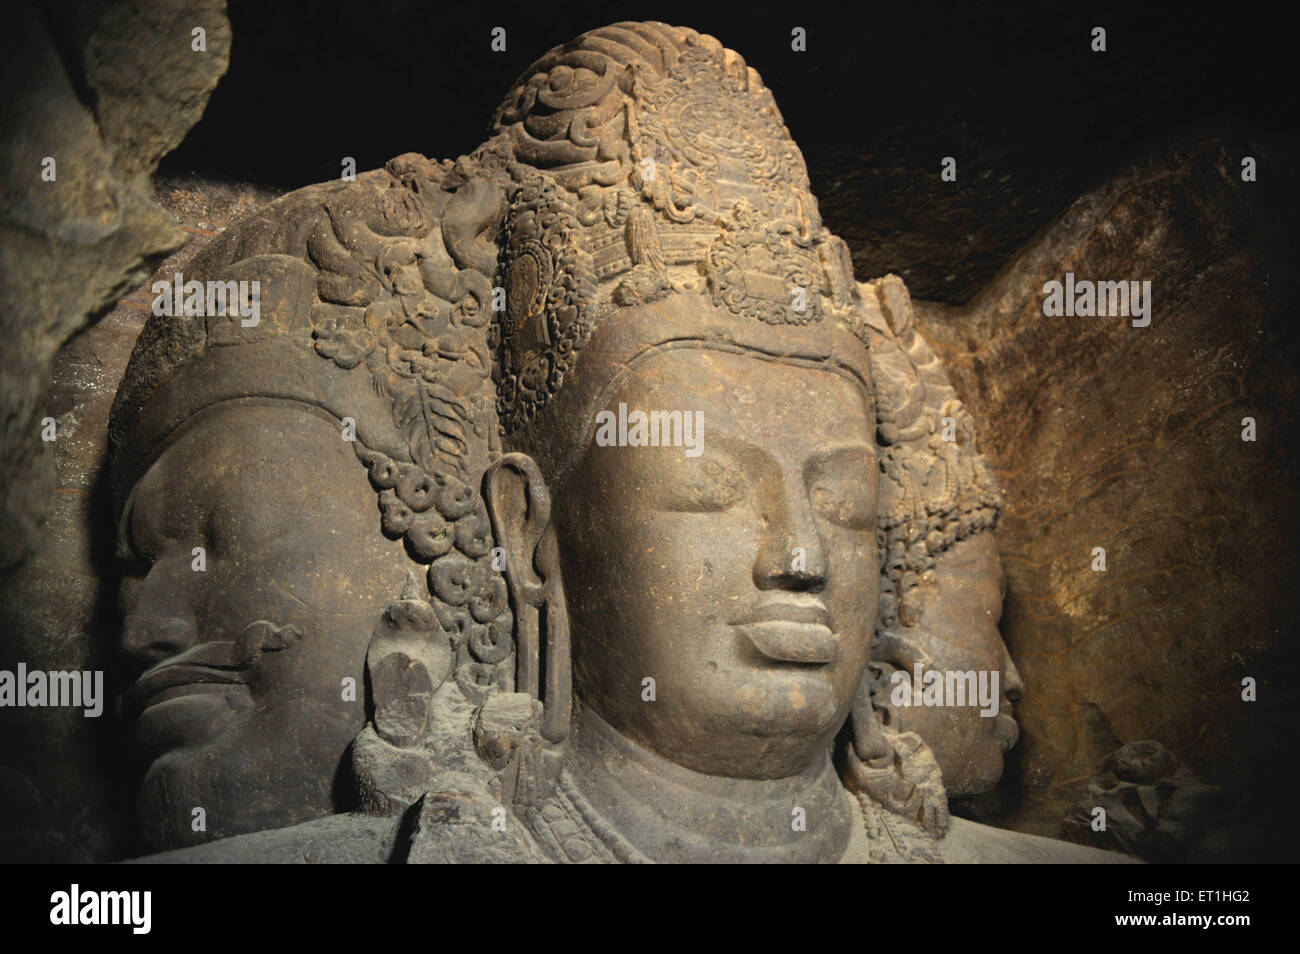 Lord Shiva, Grotte di Elephanta, scultura in pietra, altorilievo, roccia basaltica, Isola di Elephanta, Gharapuri, Bombay, Mumbai, Maharashtra, India, Asia Foto Stock